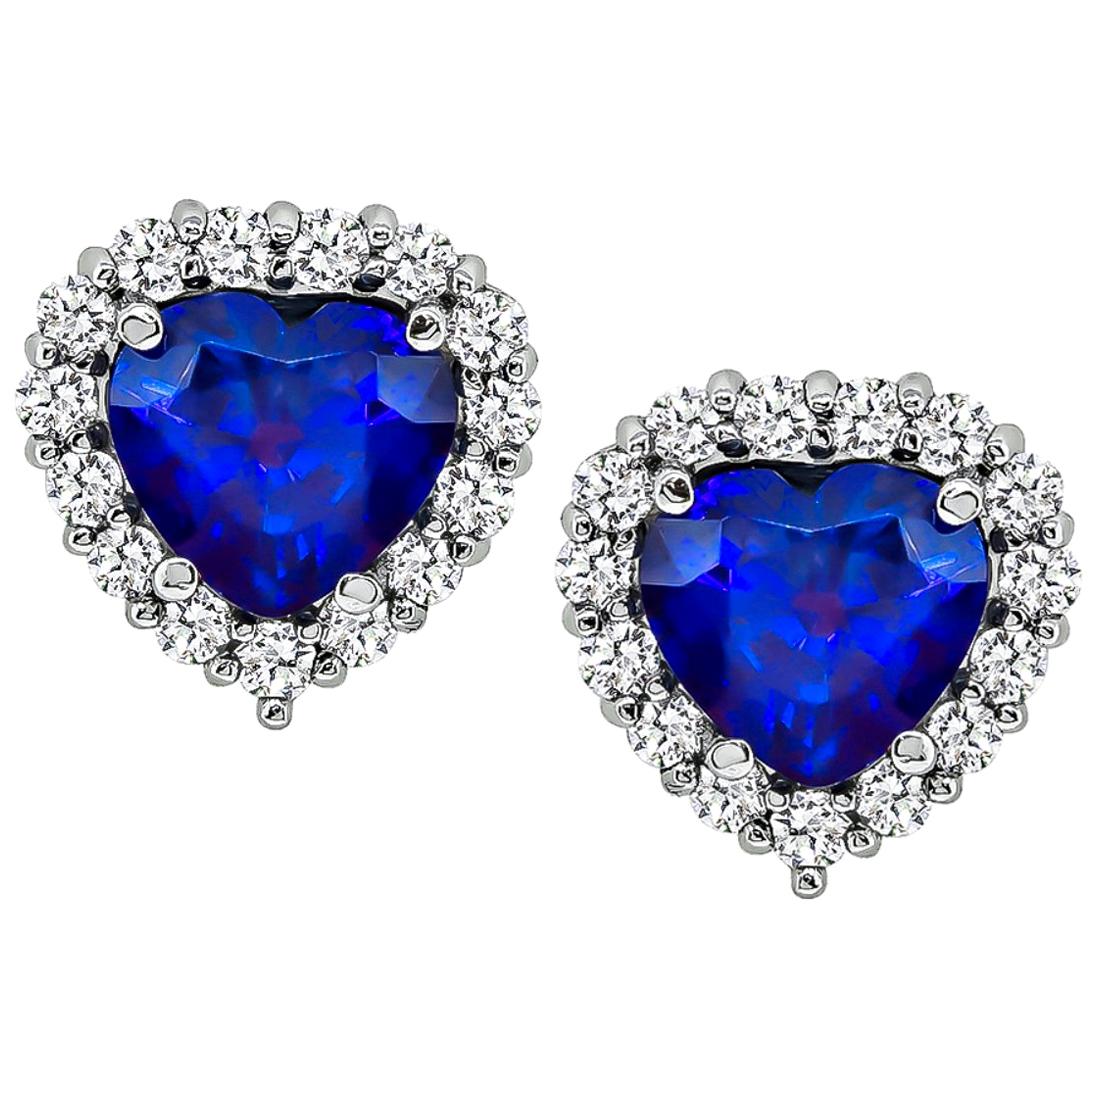 3.24 Carat Sapphire Diamond Gold Heart Earrings